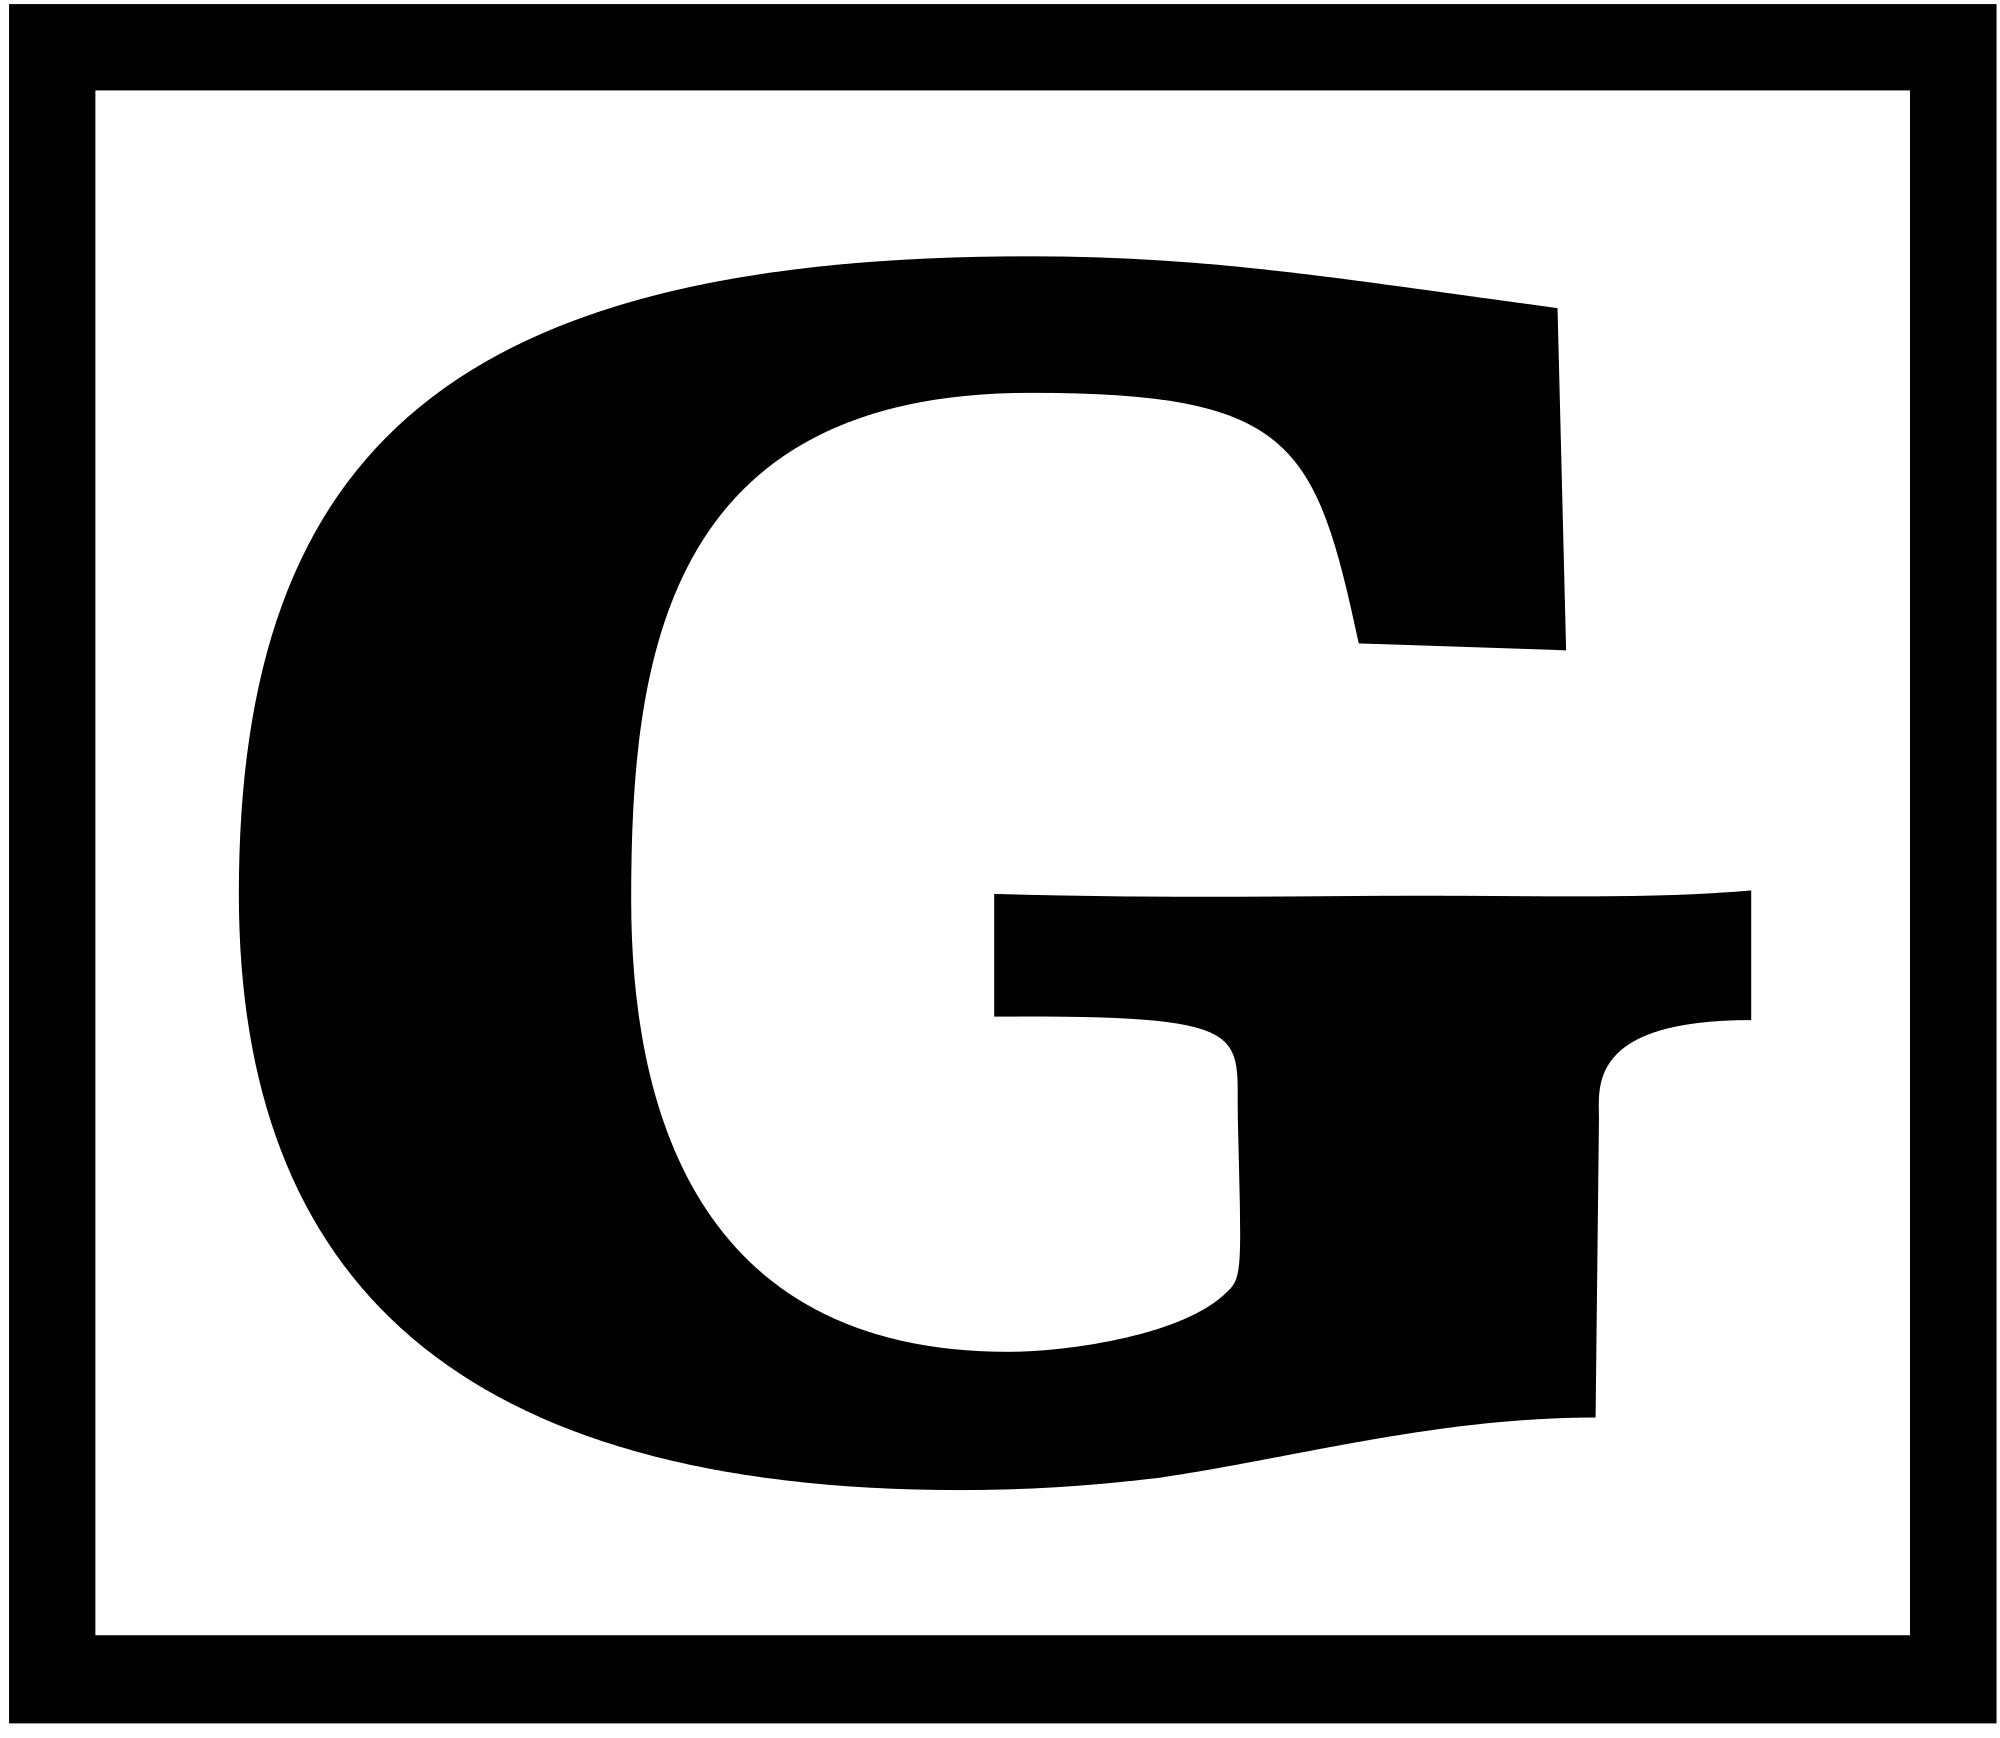 Rating Box Logo - RATED G.svg